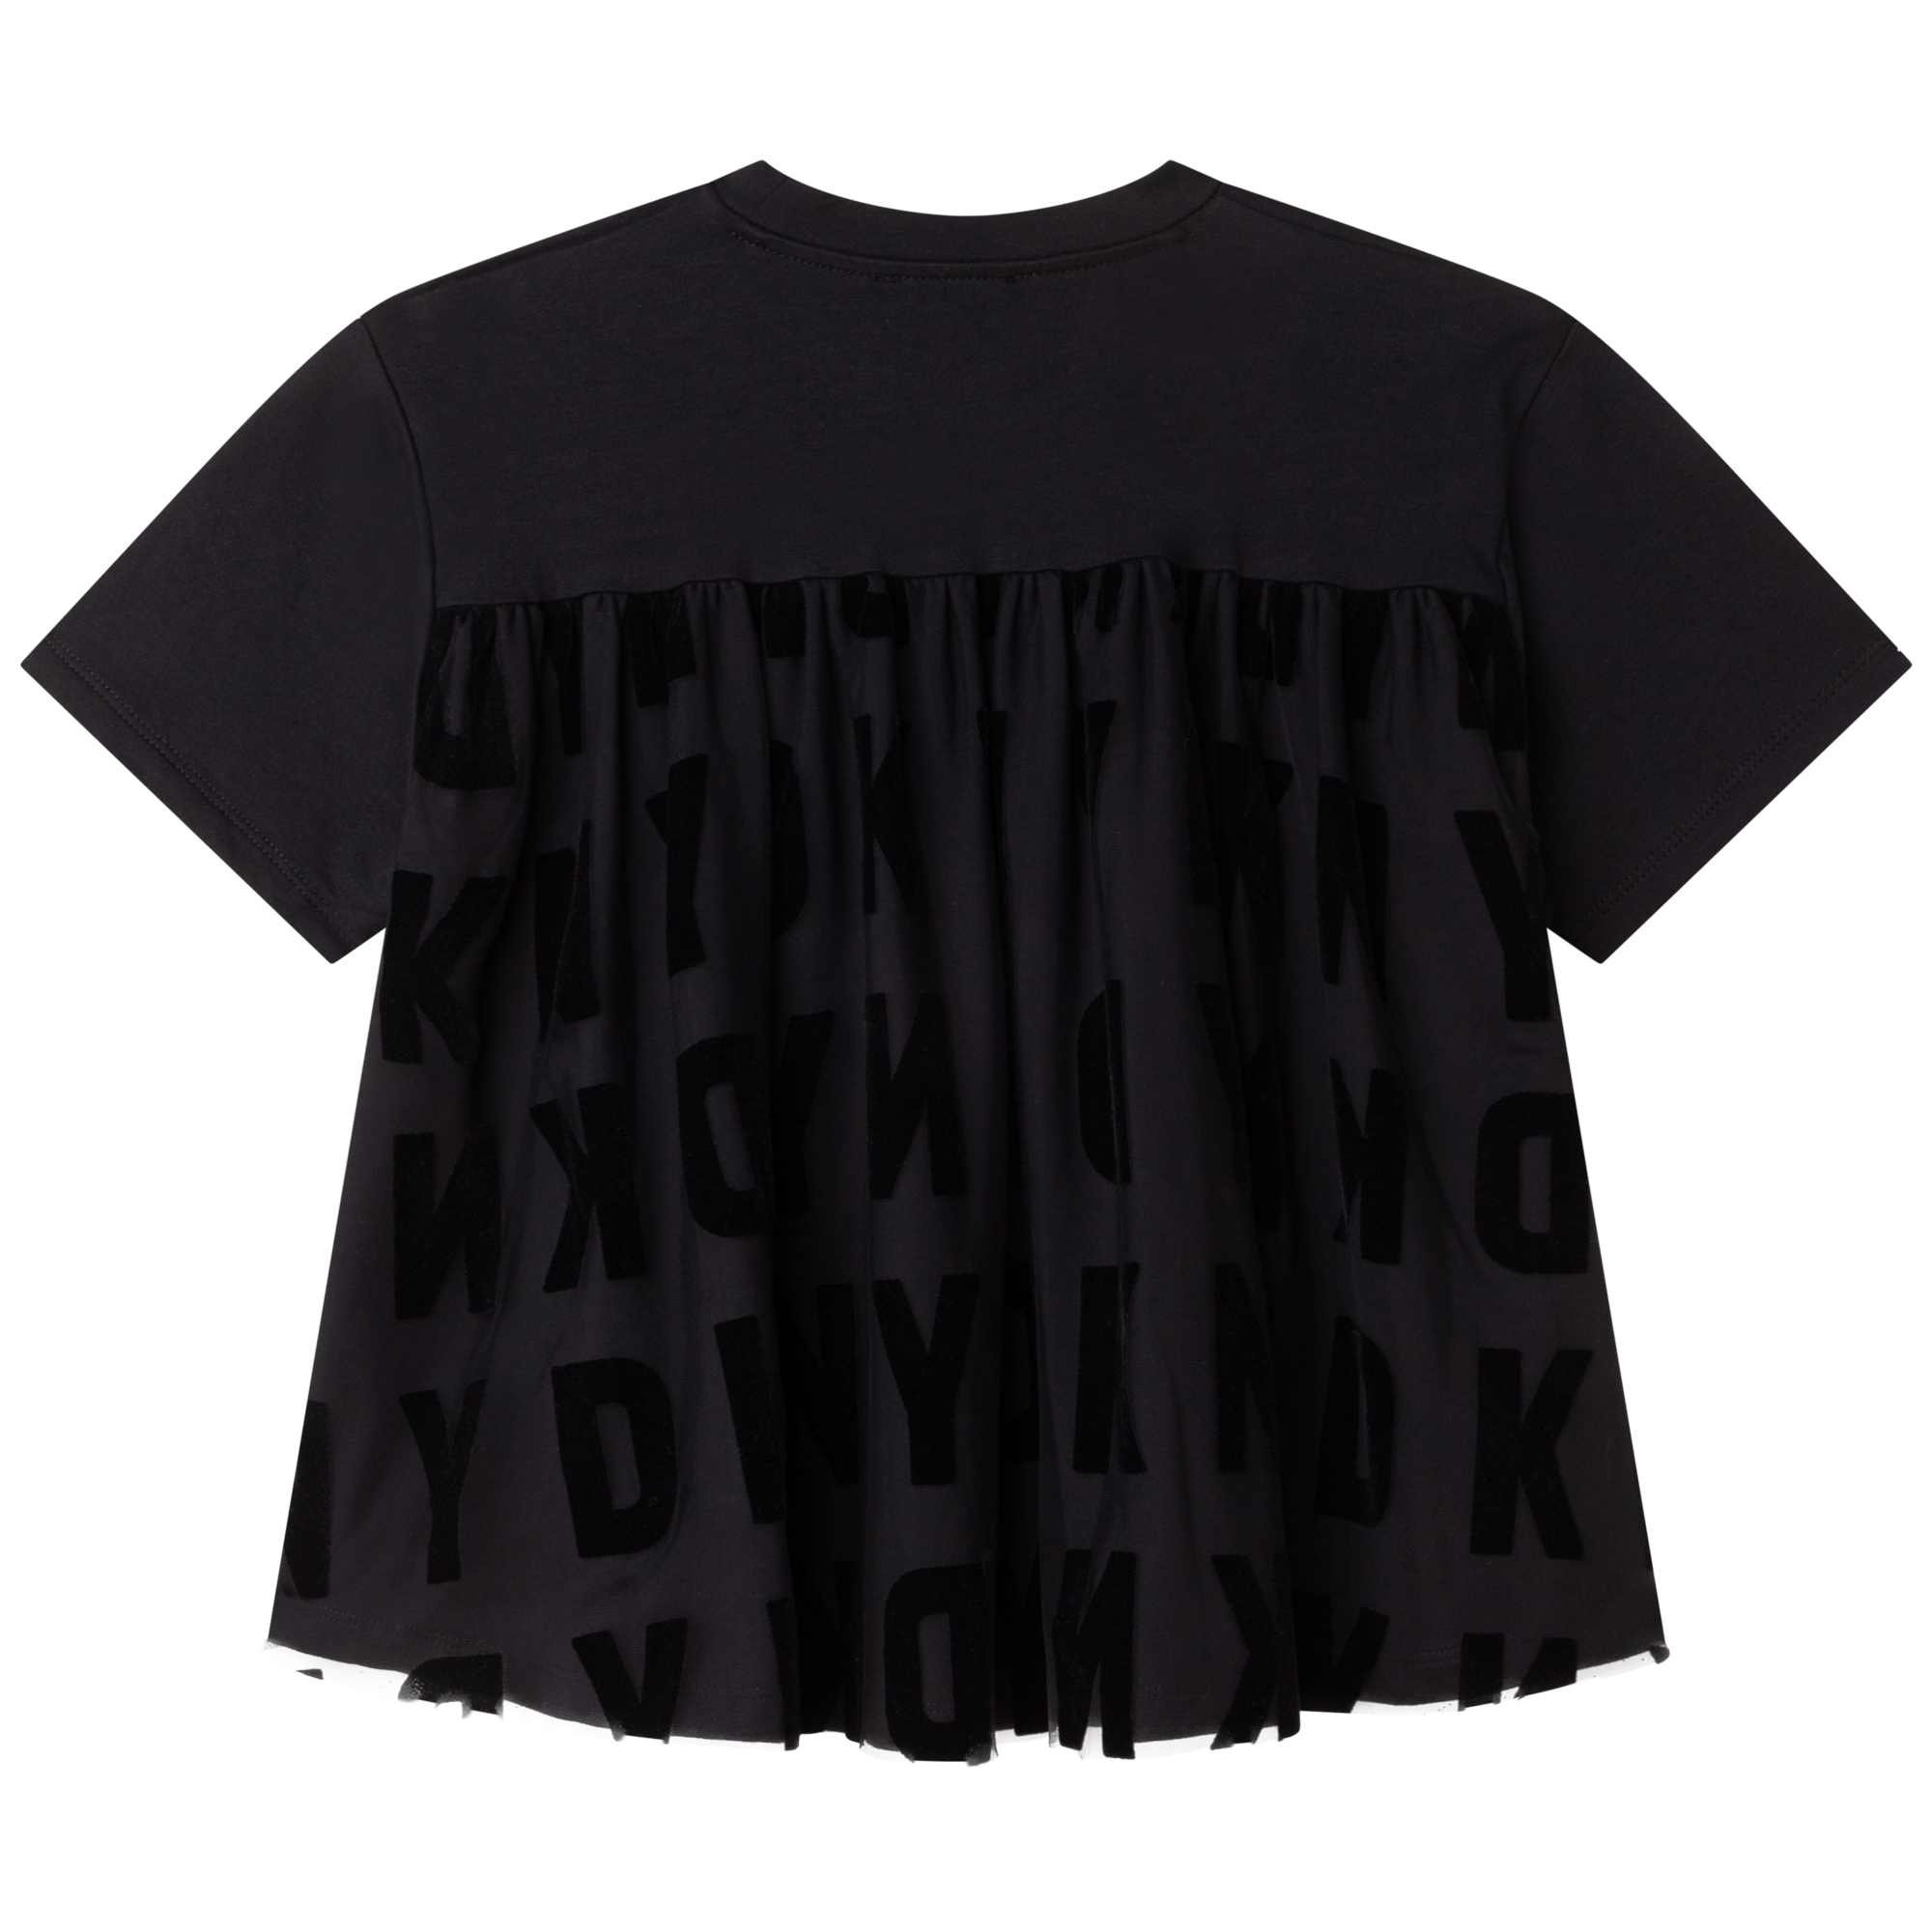 Camiseta bimateria lisa DKNY para NIÑA